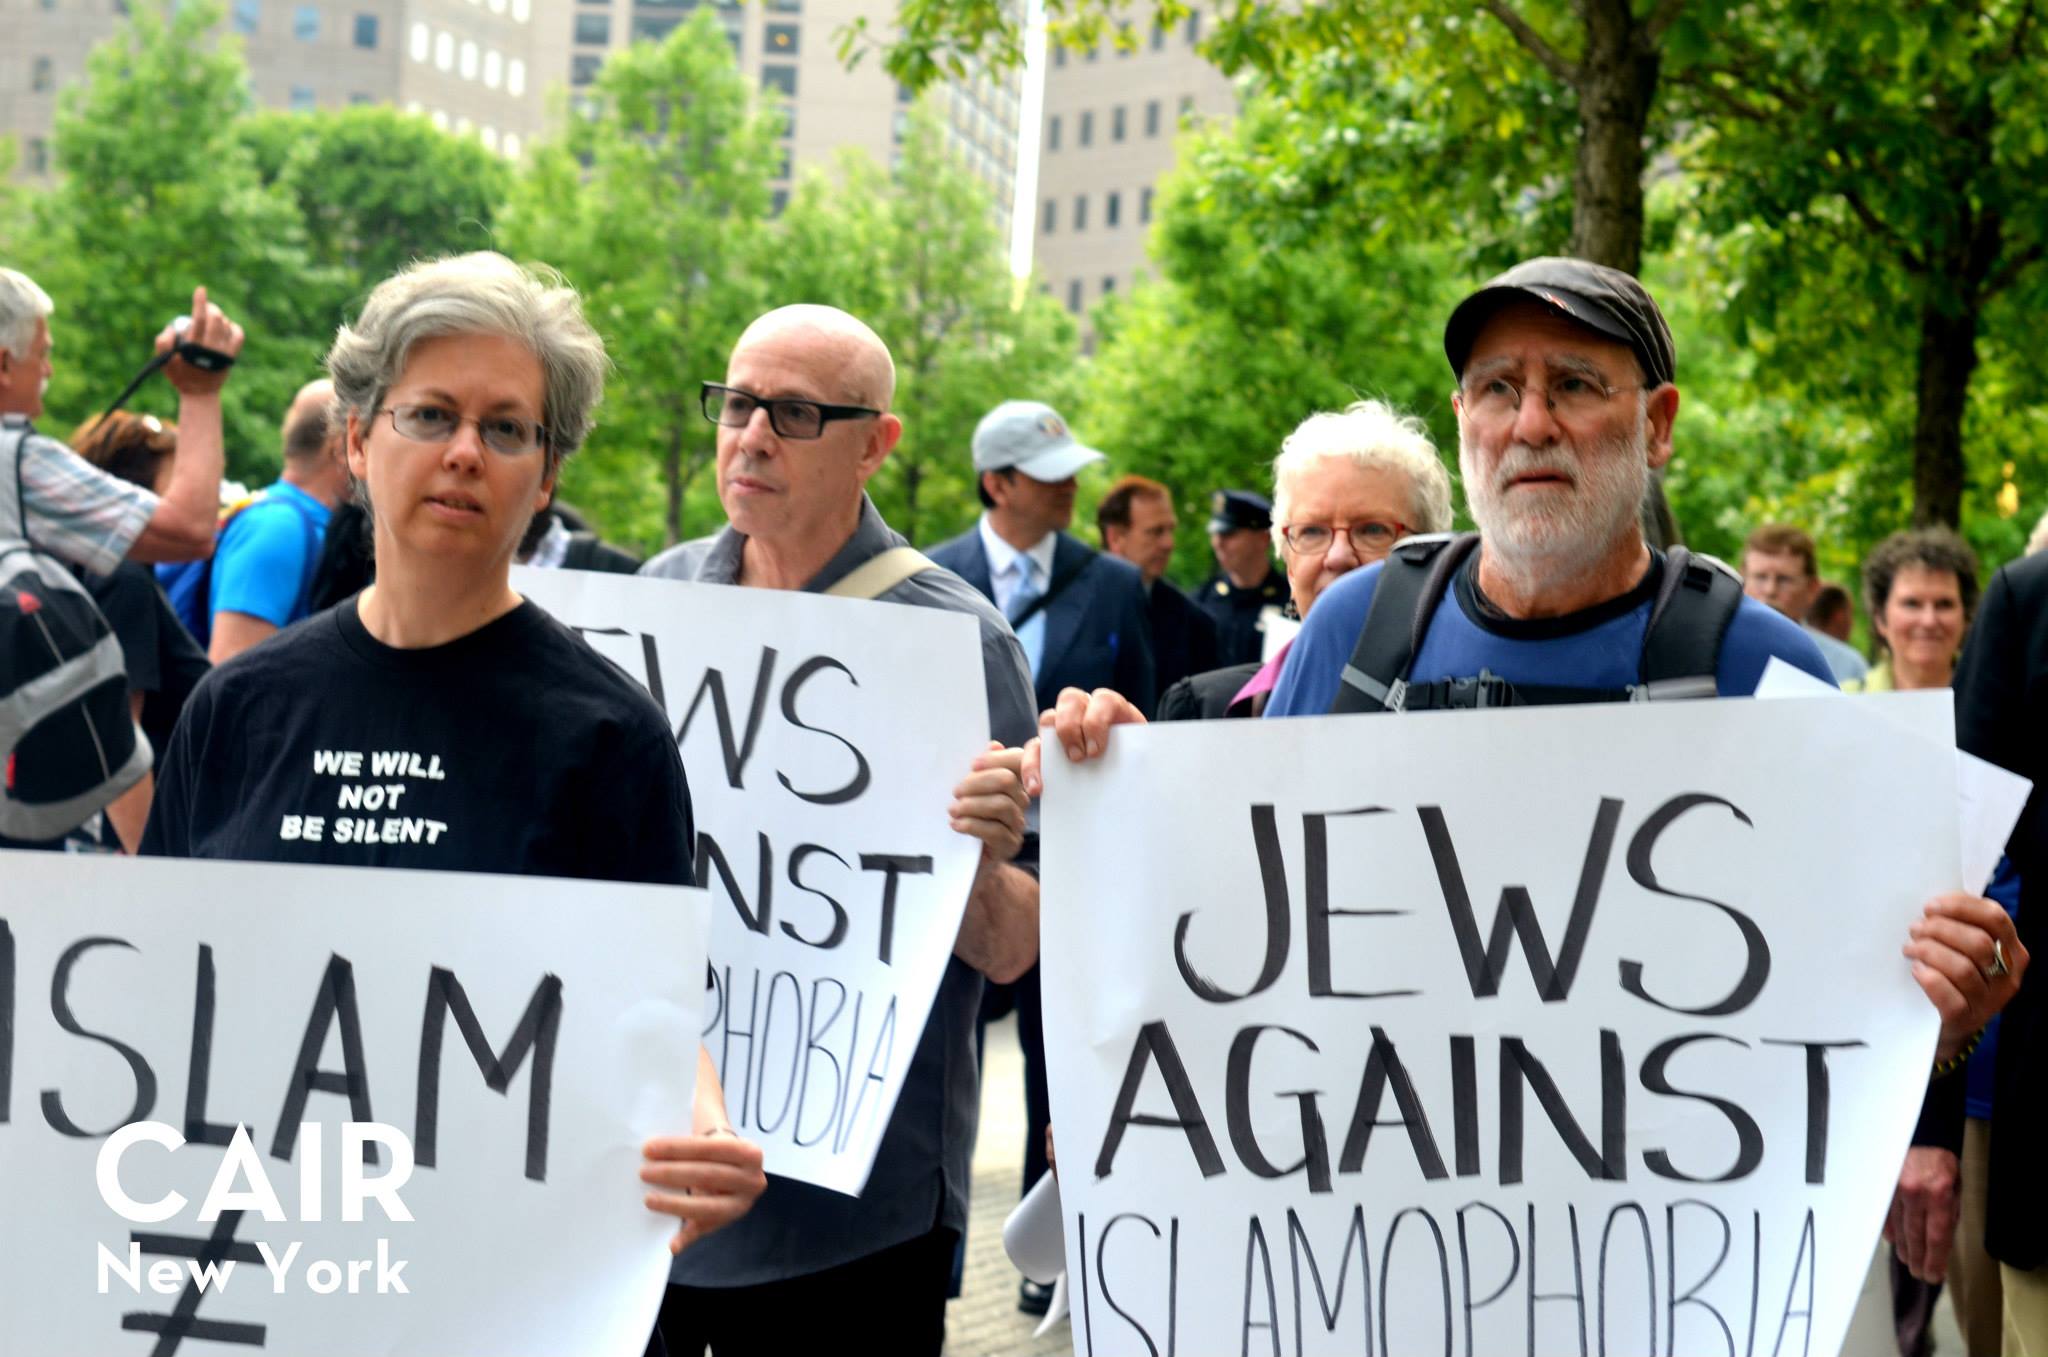 Jews Against Islamophobia 9-11 museum protest